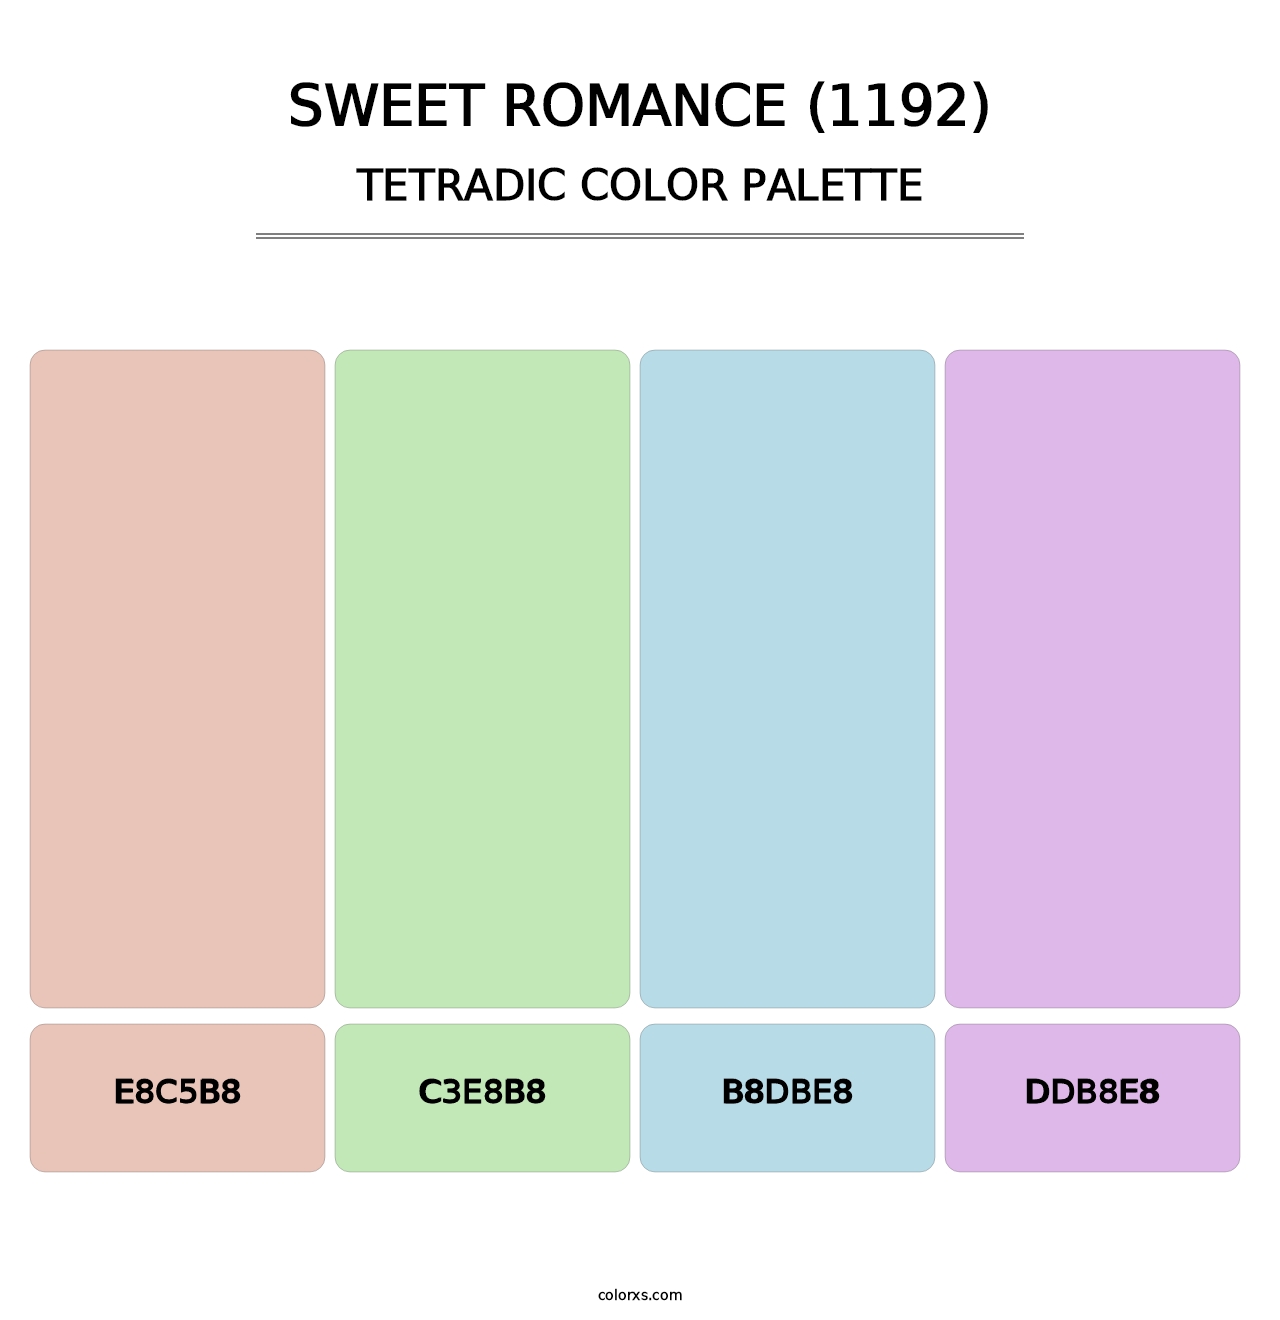 Sweet Romance (1192) - Tetradic Color Palette